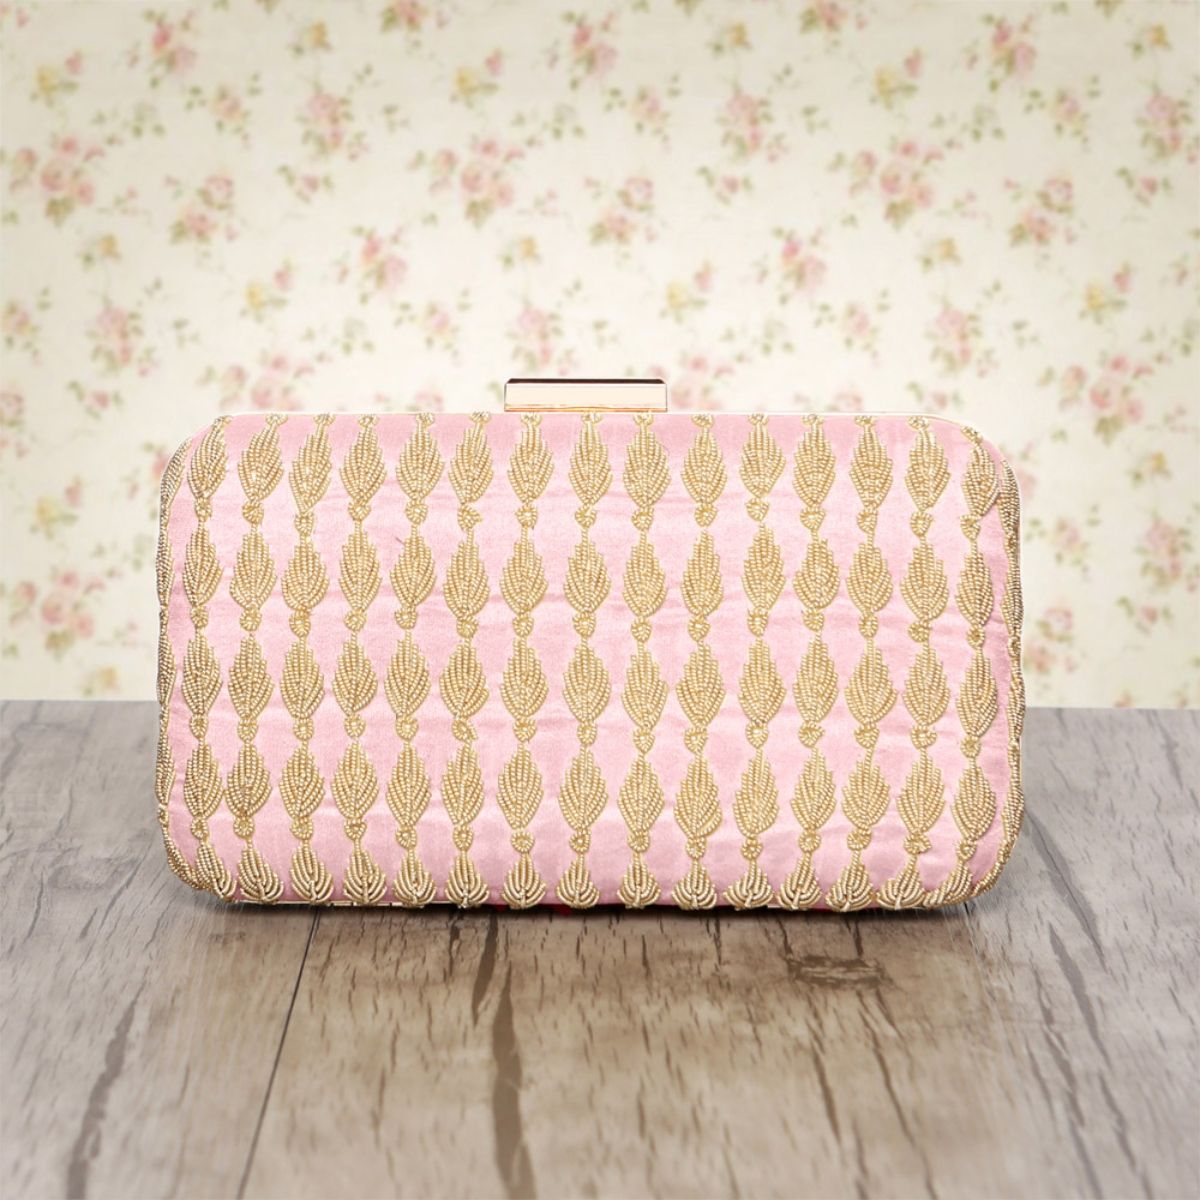 Buy Taffy Pink Ikat Clutch Bag for Women Online in India